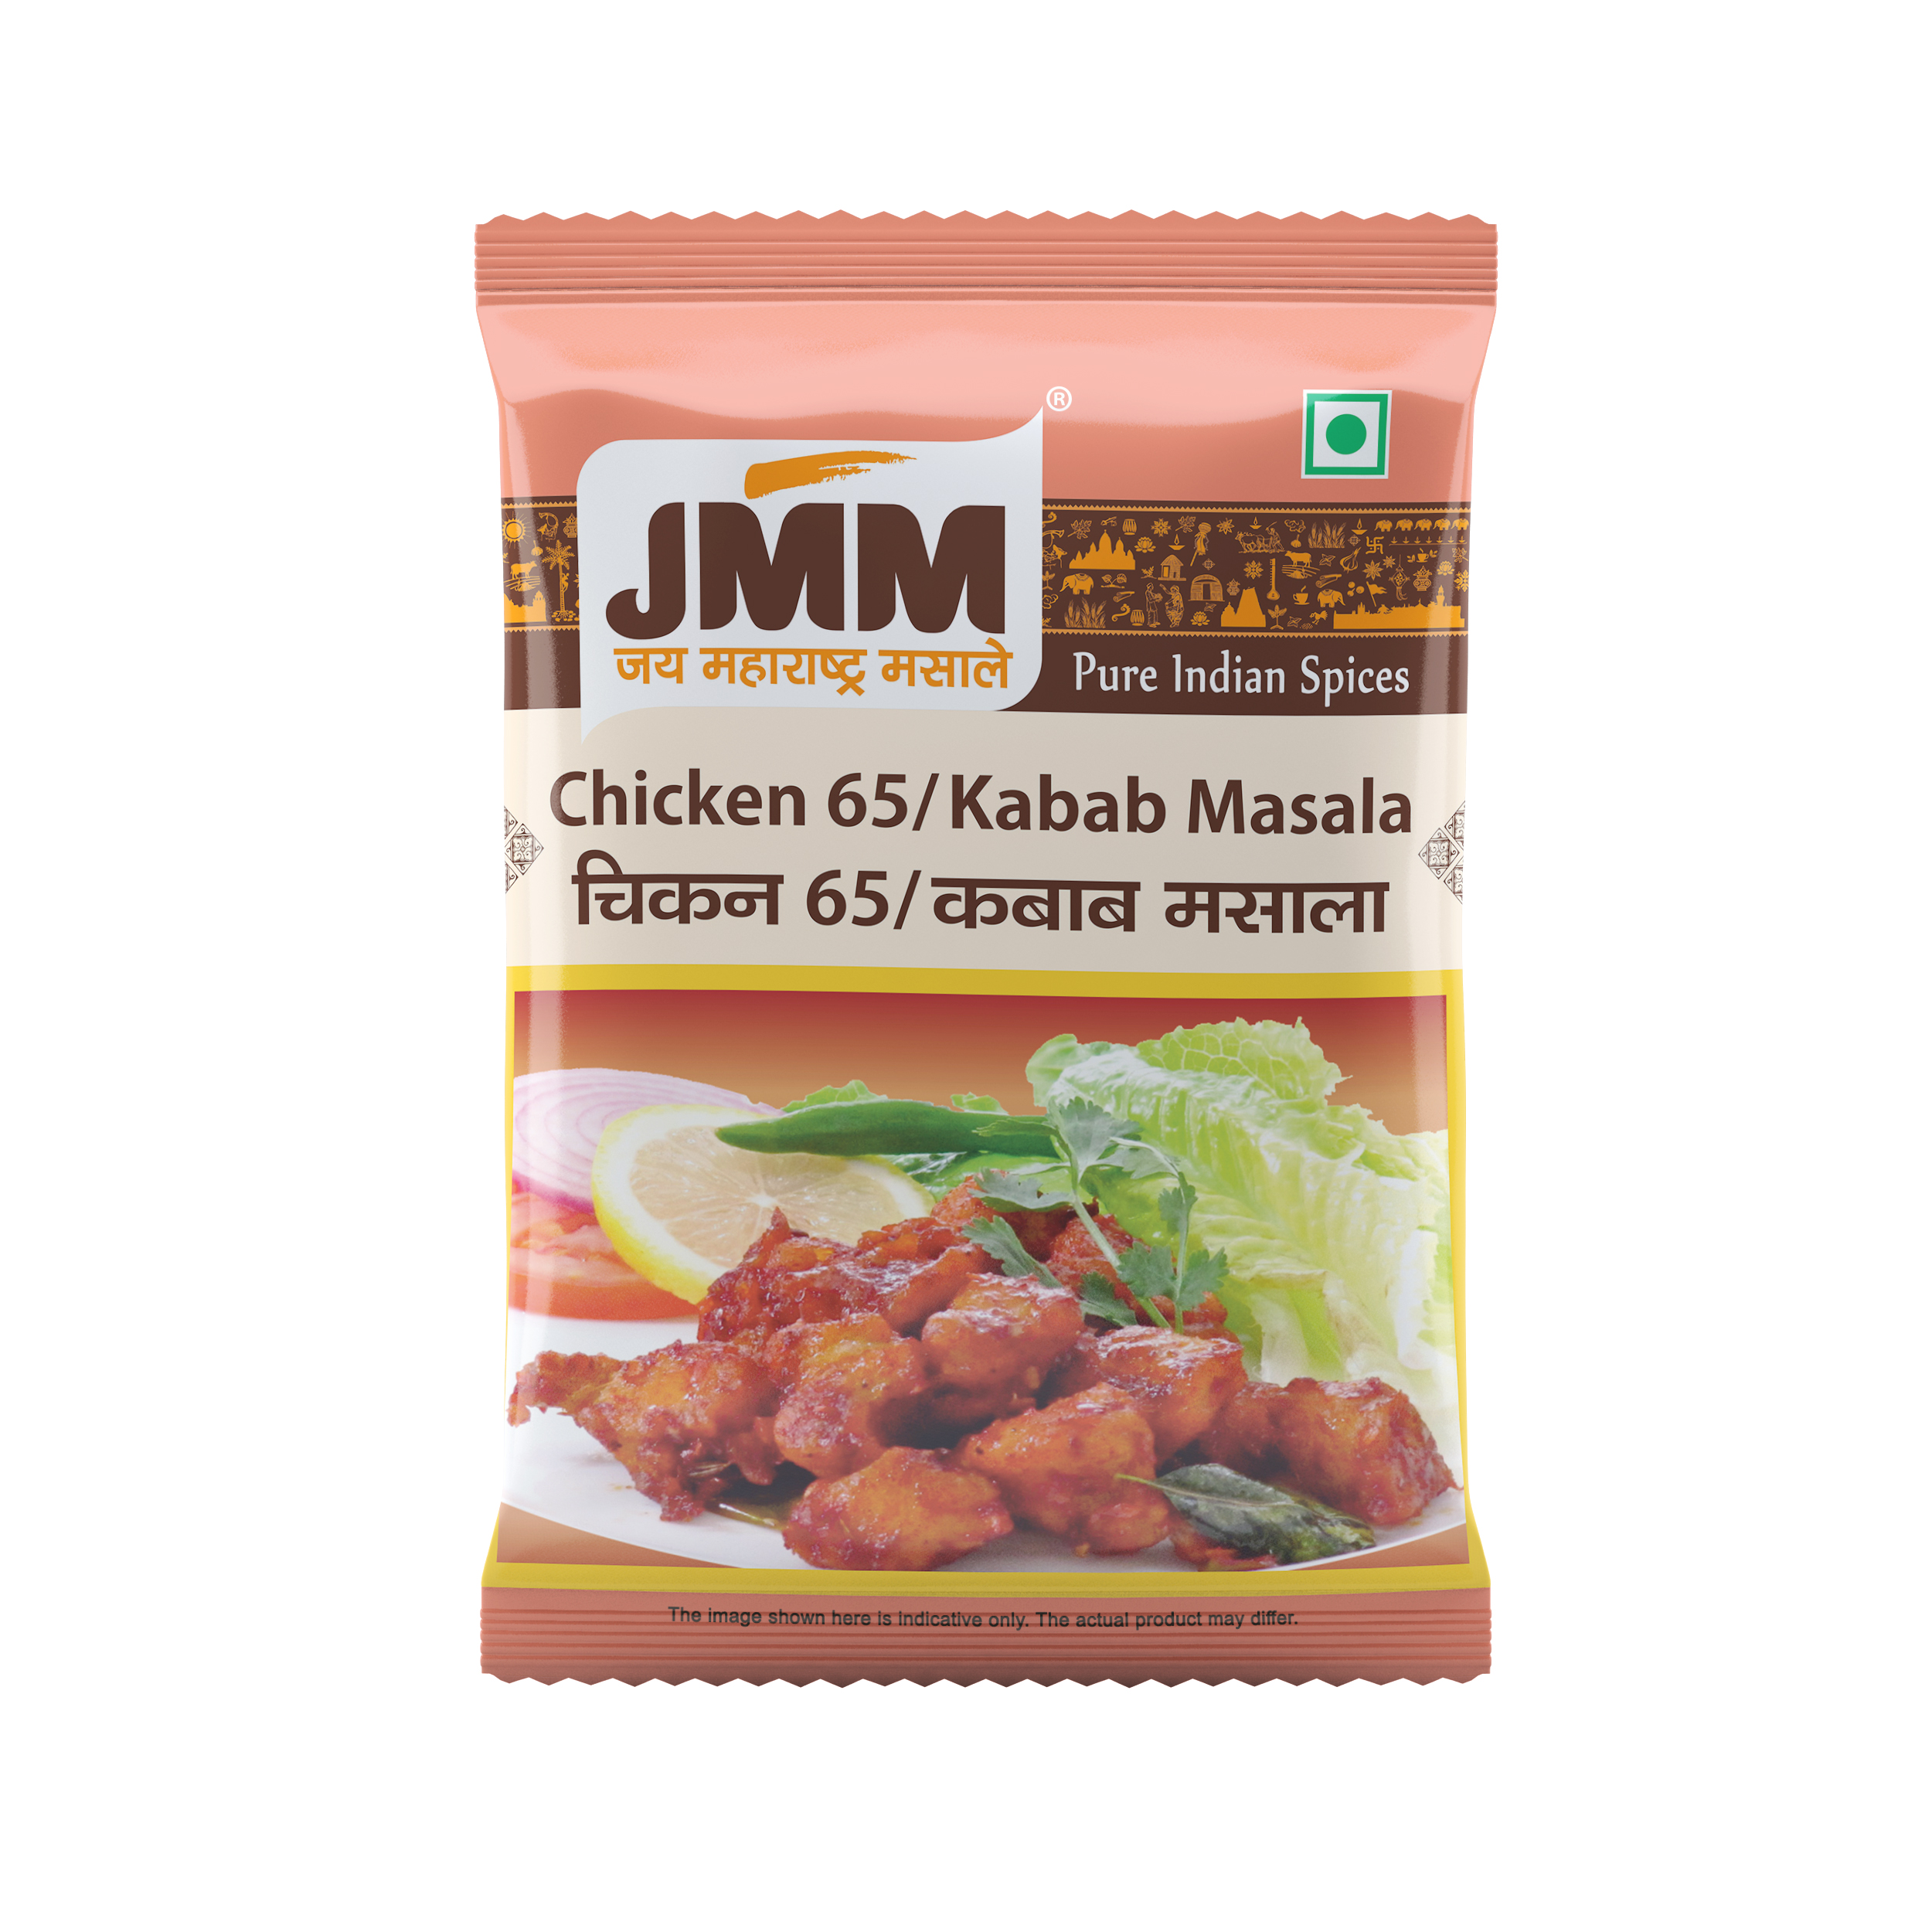 Chicken 65 / Kabab Masala — JMM Spices